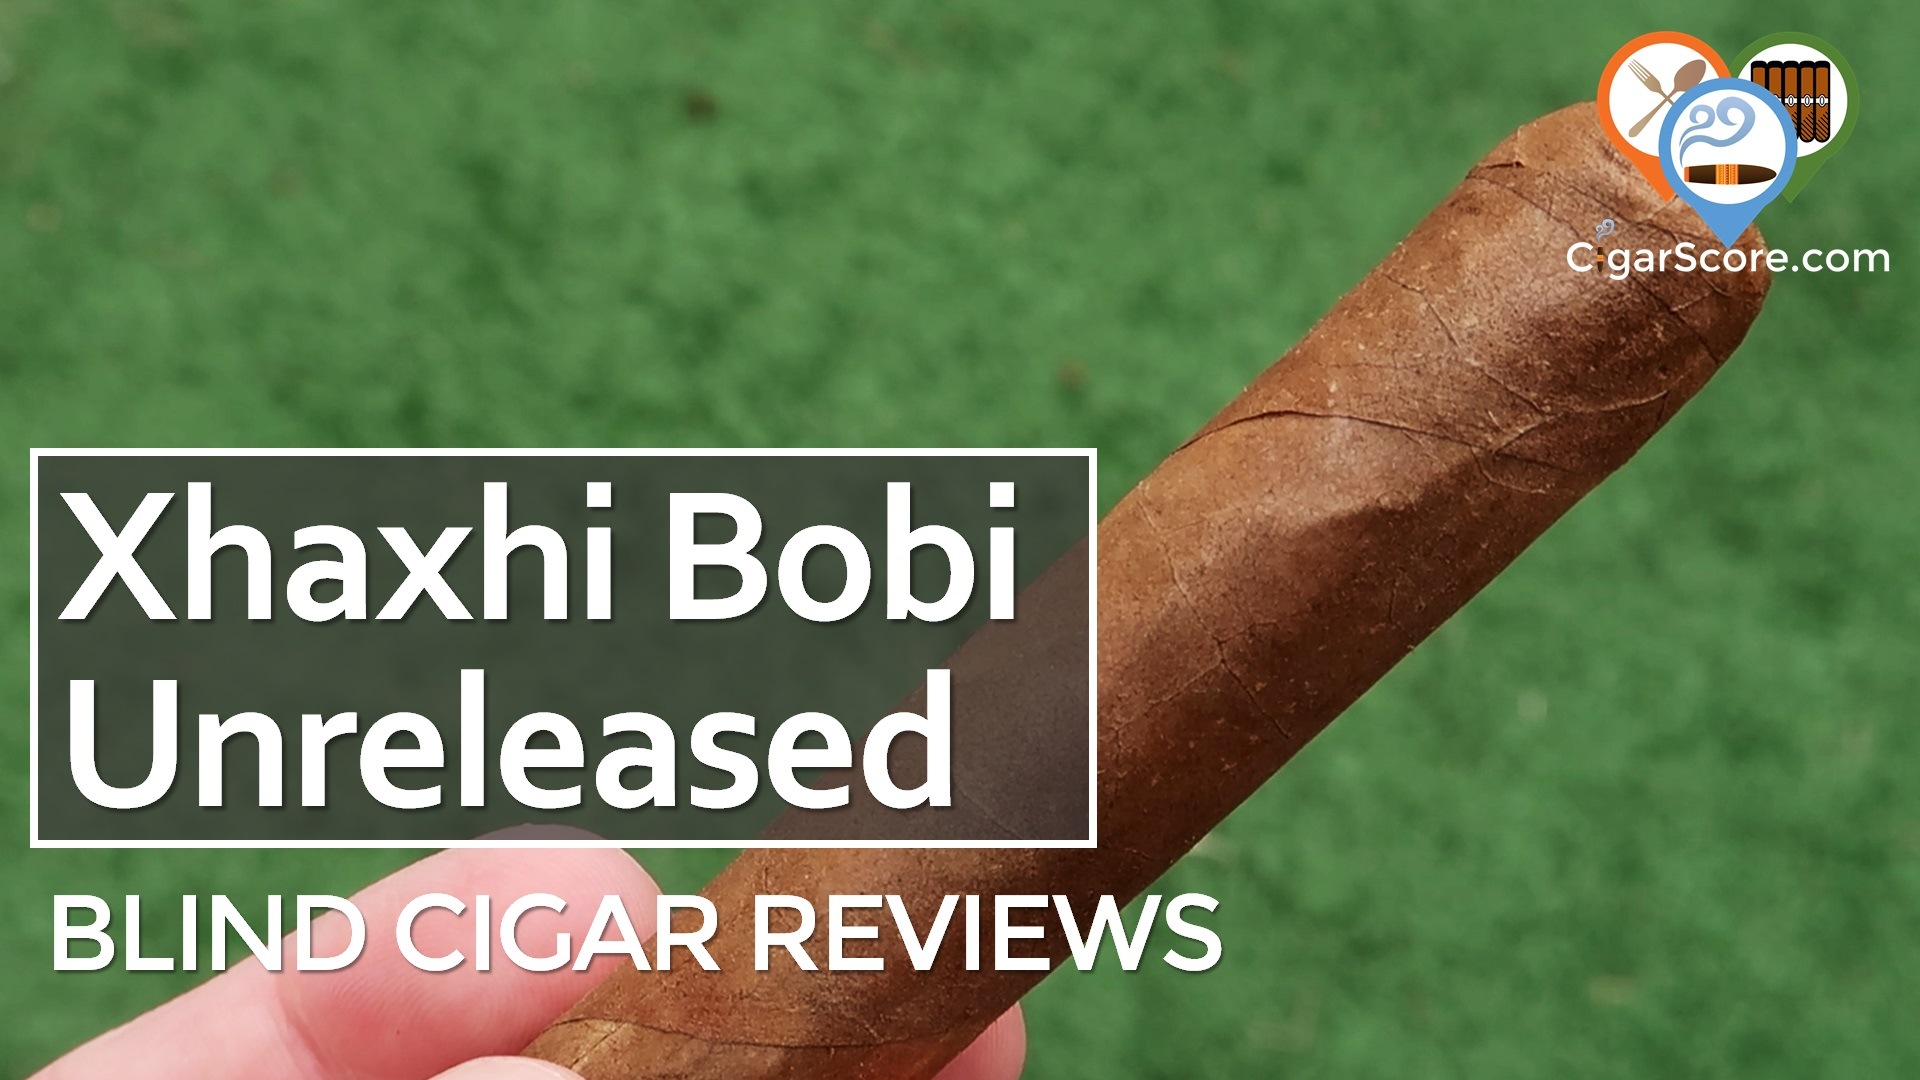 cigar Review Xhaxhi Bobi Unreleased featured image